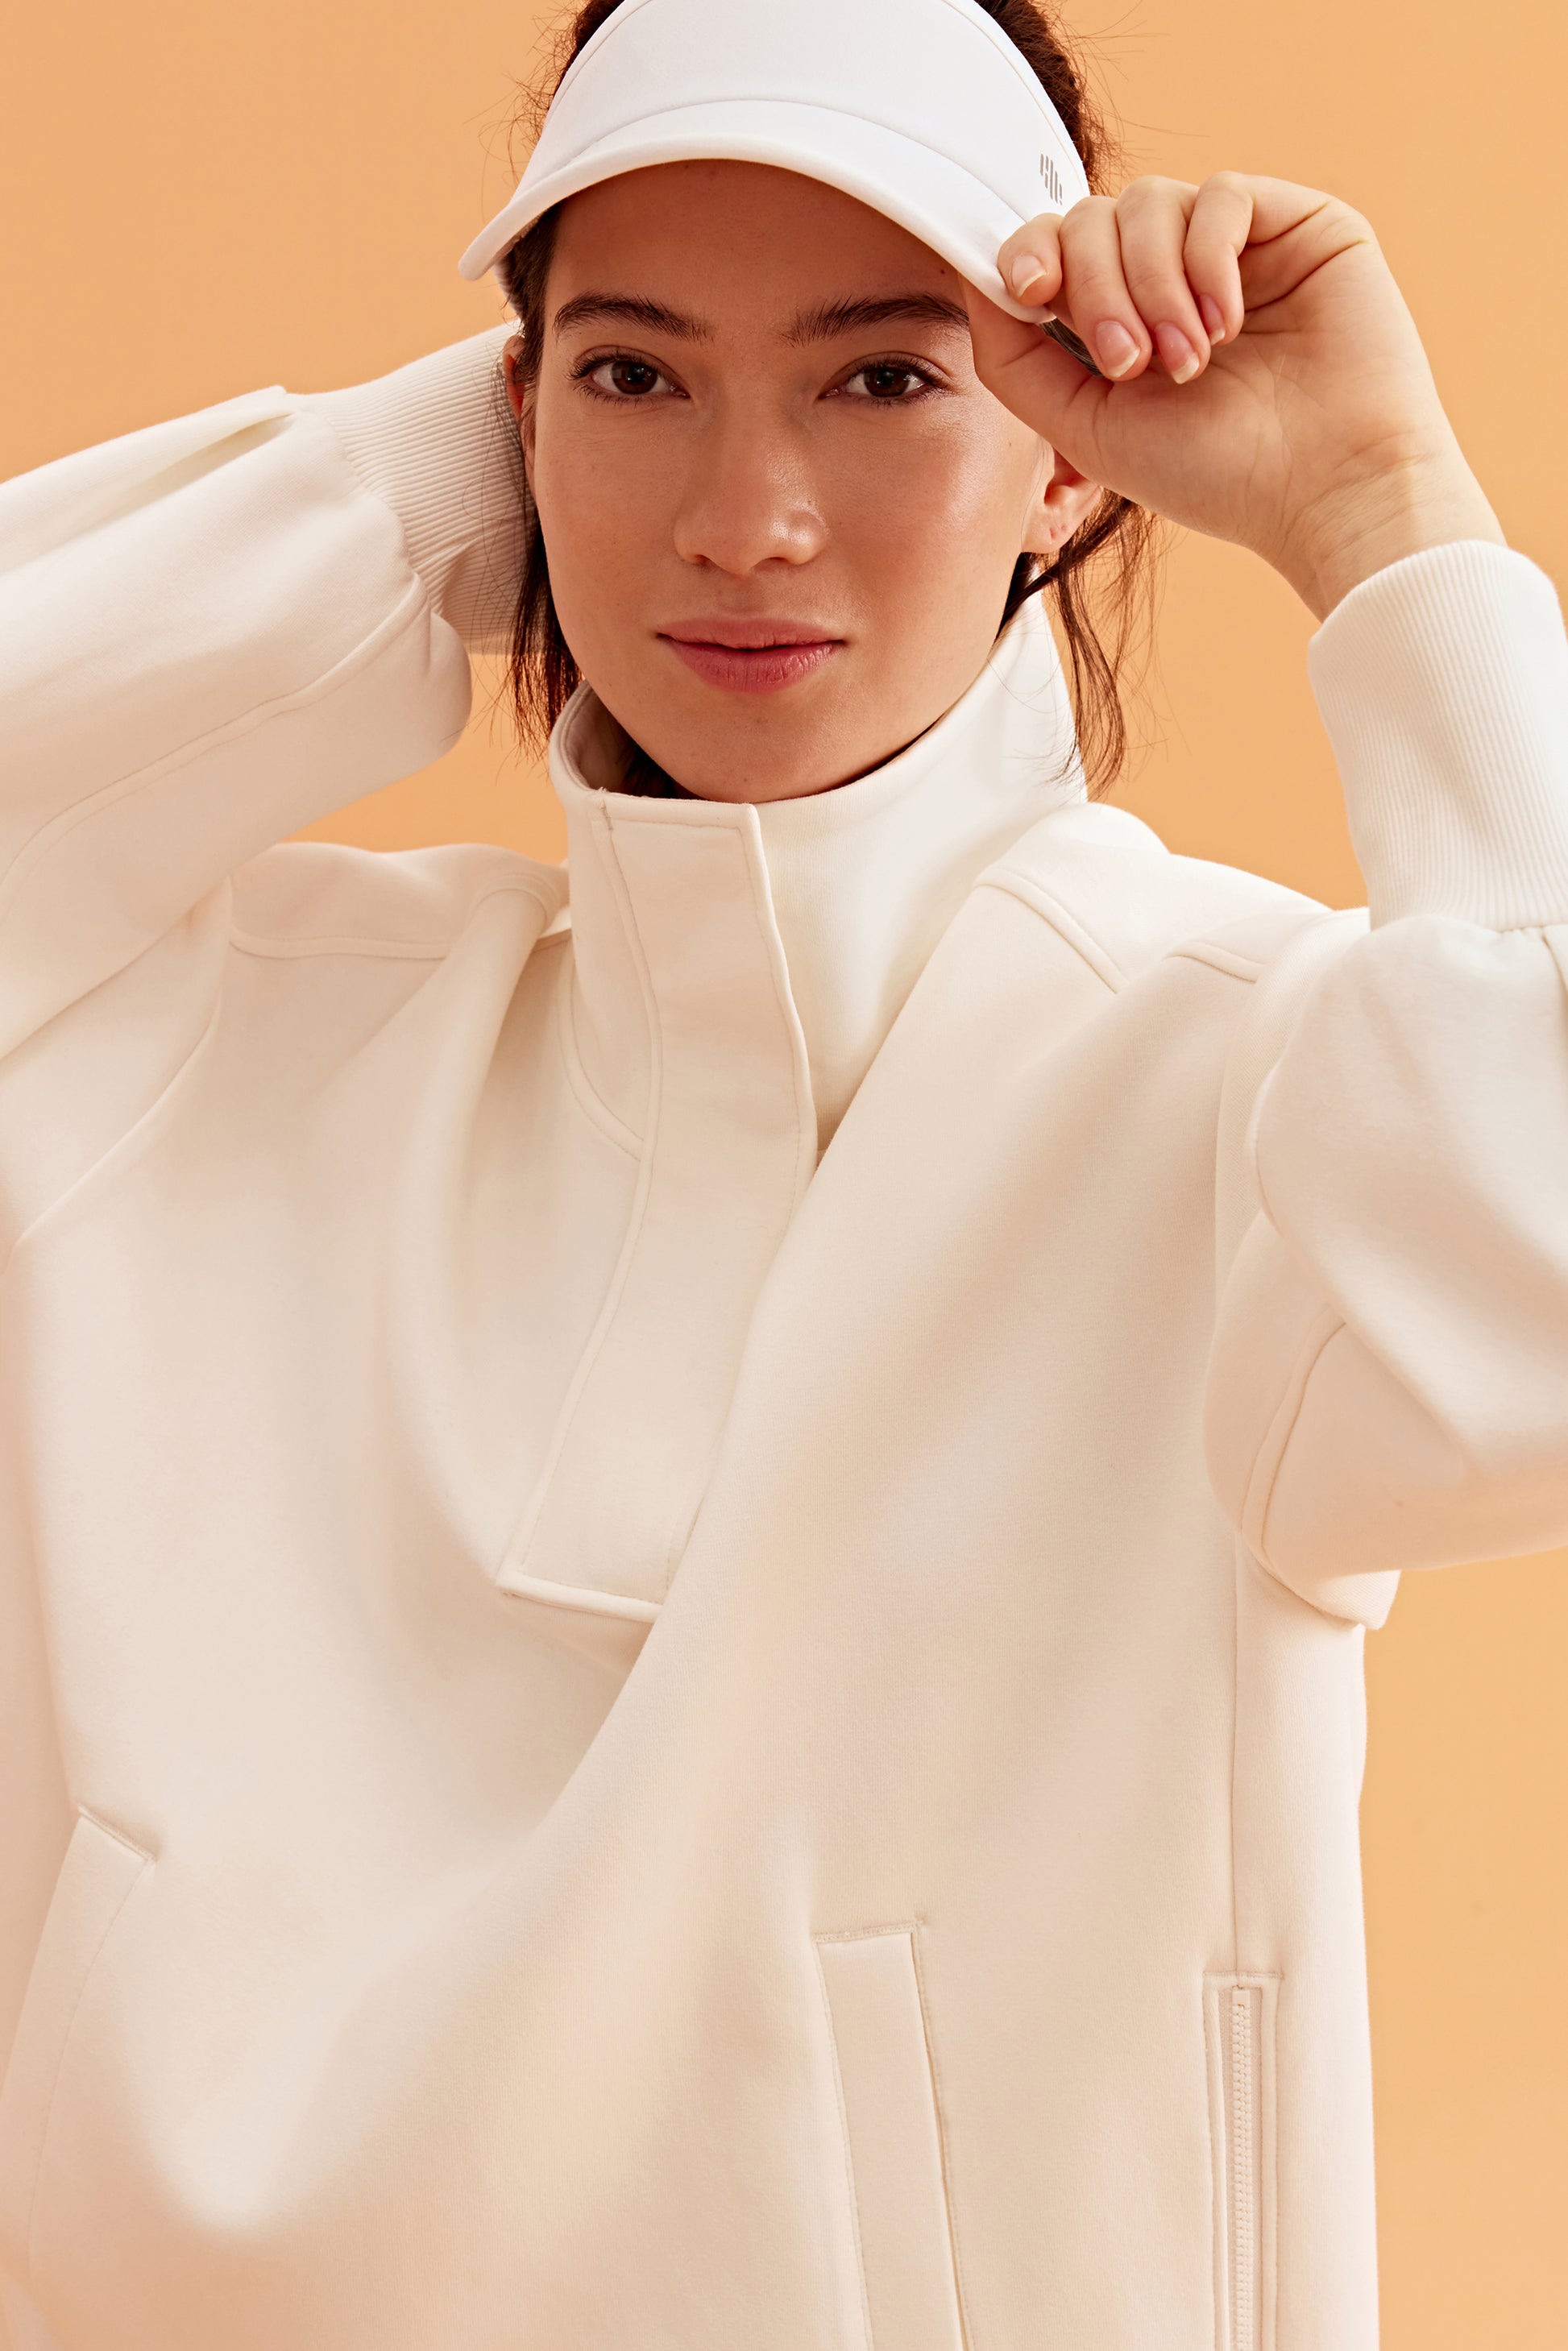 woman wearing a white visor and white half zip sweatshirt and white pants.